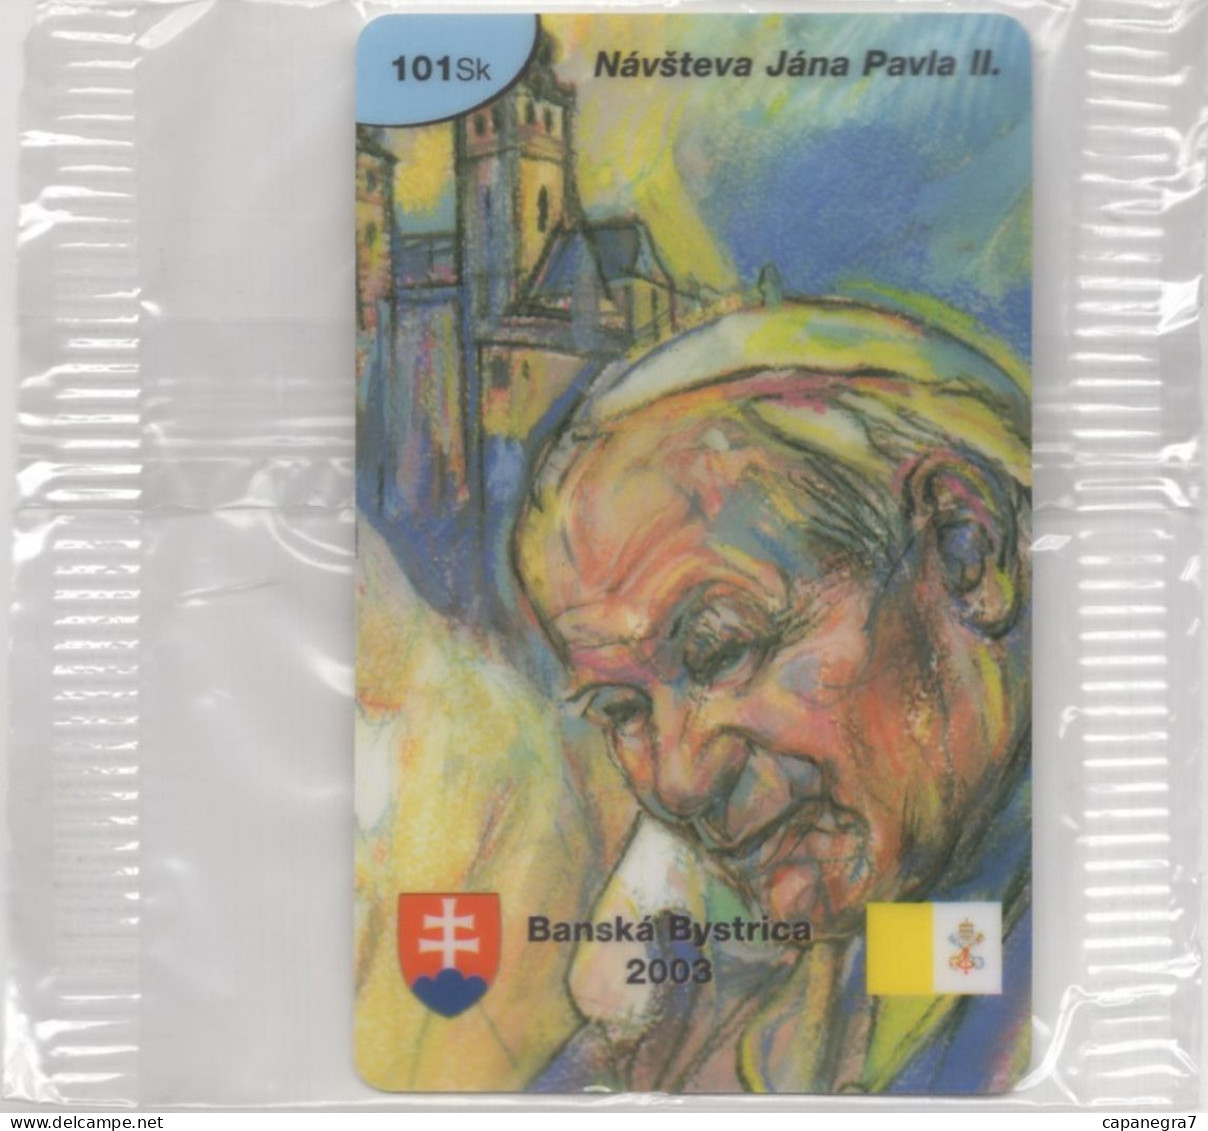 Pope John Paulu II. - Banská Bystica 2003, Prepaid Calling Card, 101 Sk., 1.250 Pc., GlobalIPhone, Slovak, Mint, Packed - Slovaquie